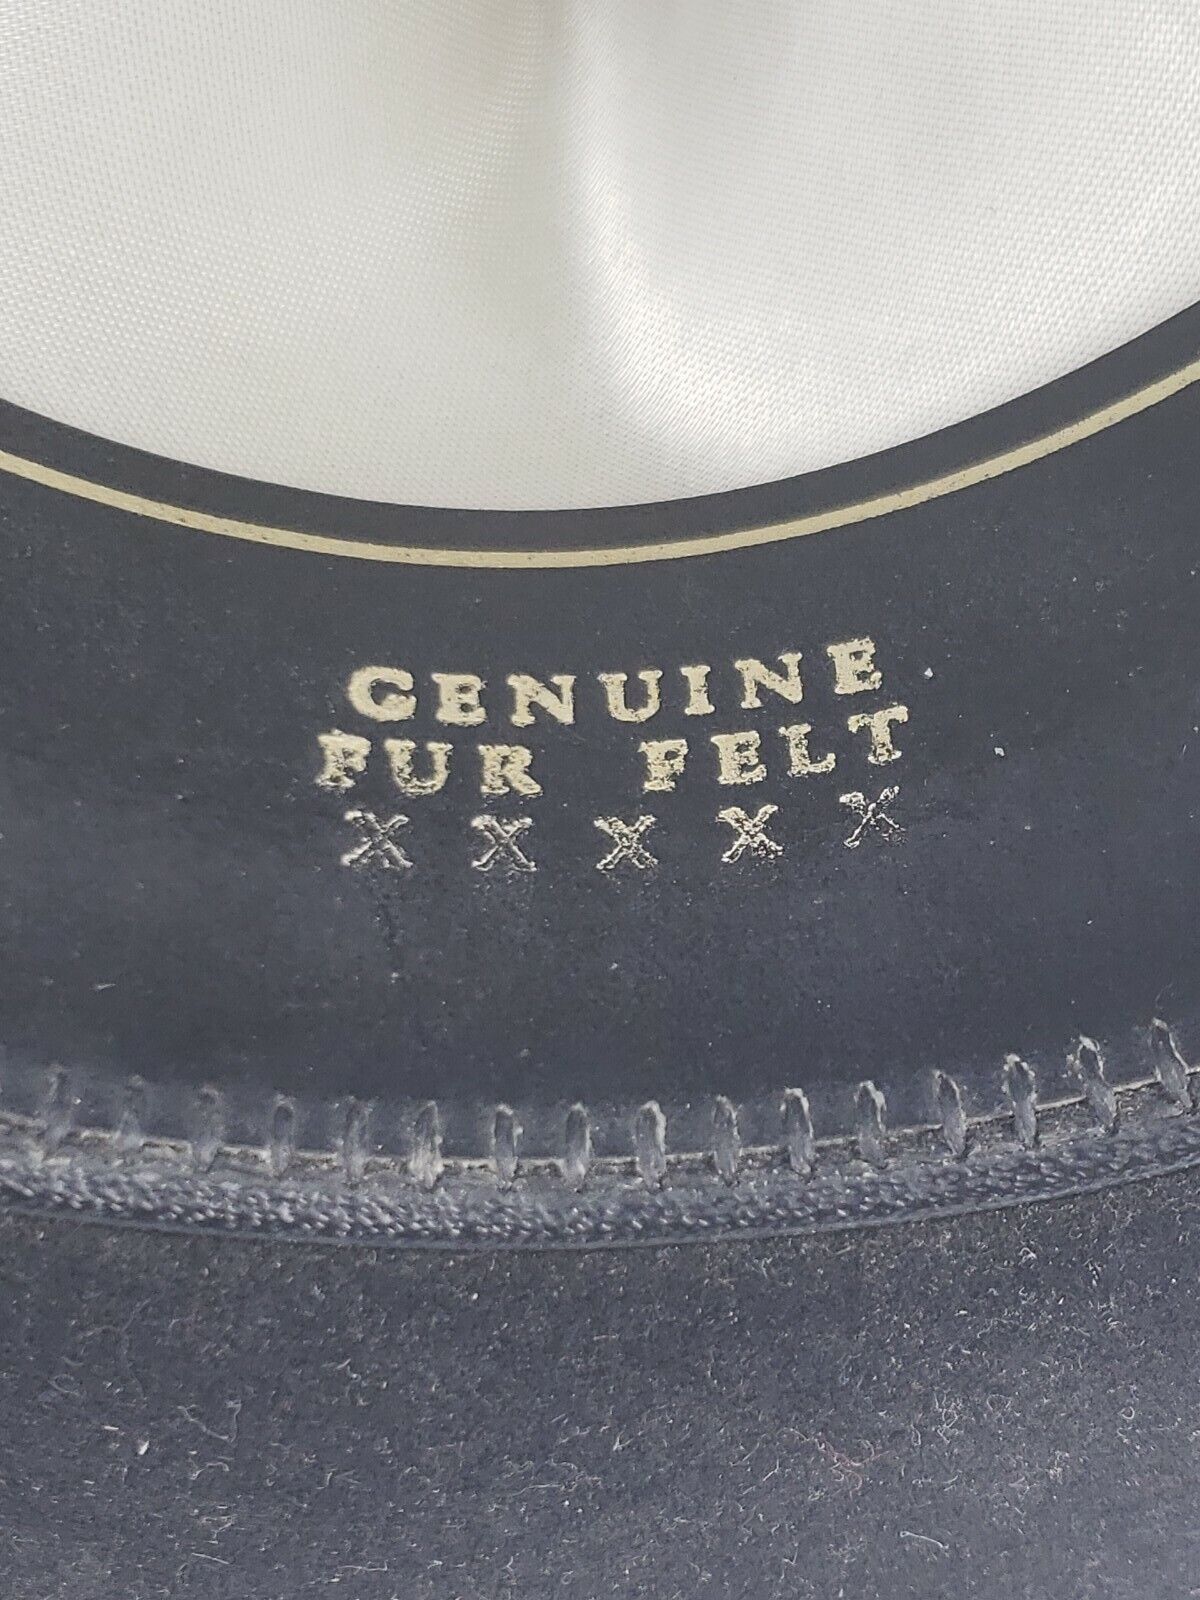 Beaver Hat Company 5X Genuine Fur Felt Cowboy Hat… - image 12